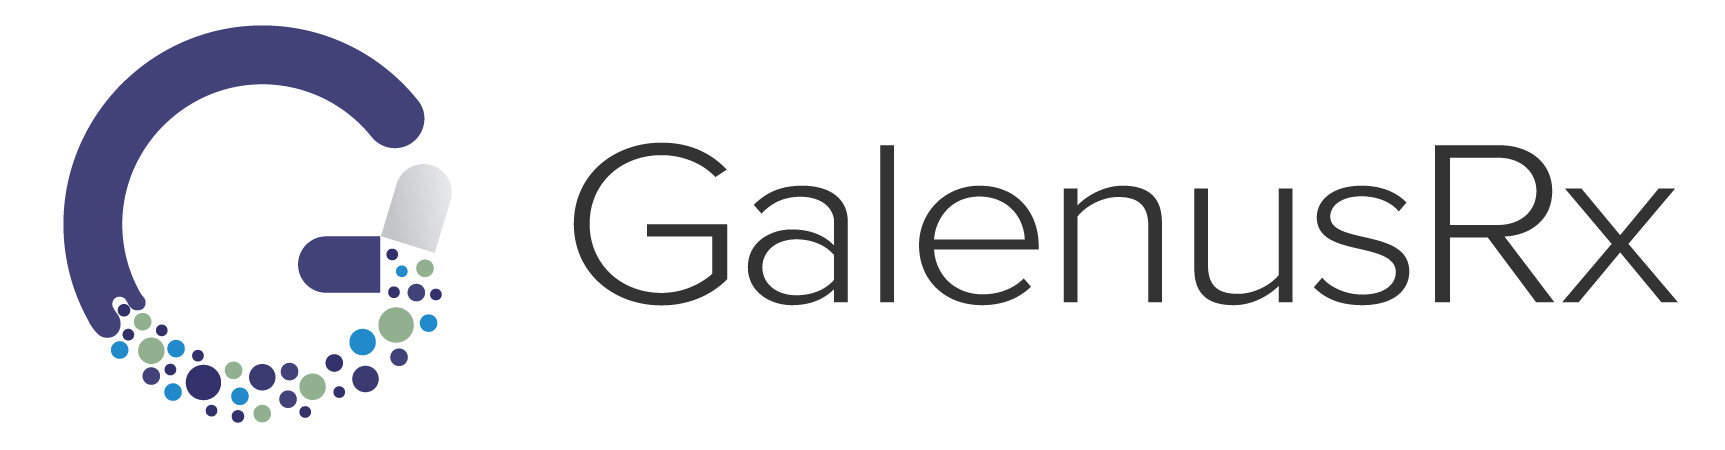 GalenusRx-Logo_Horizontal-Color